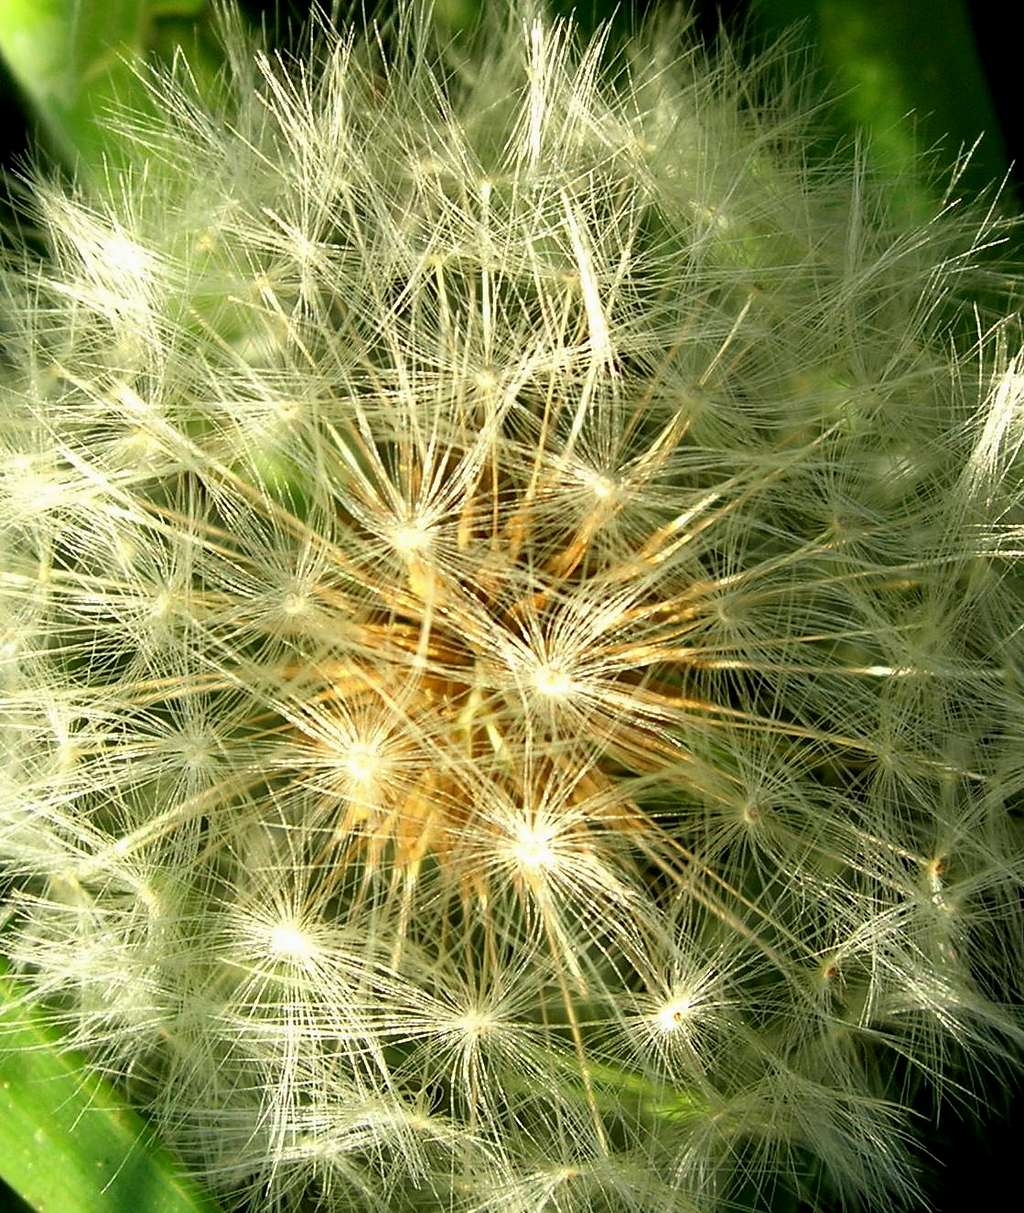 Seeds of the Dandelion